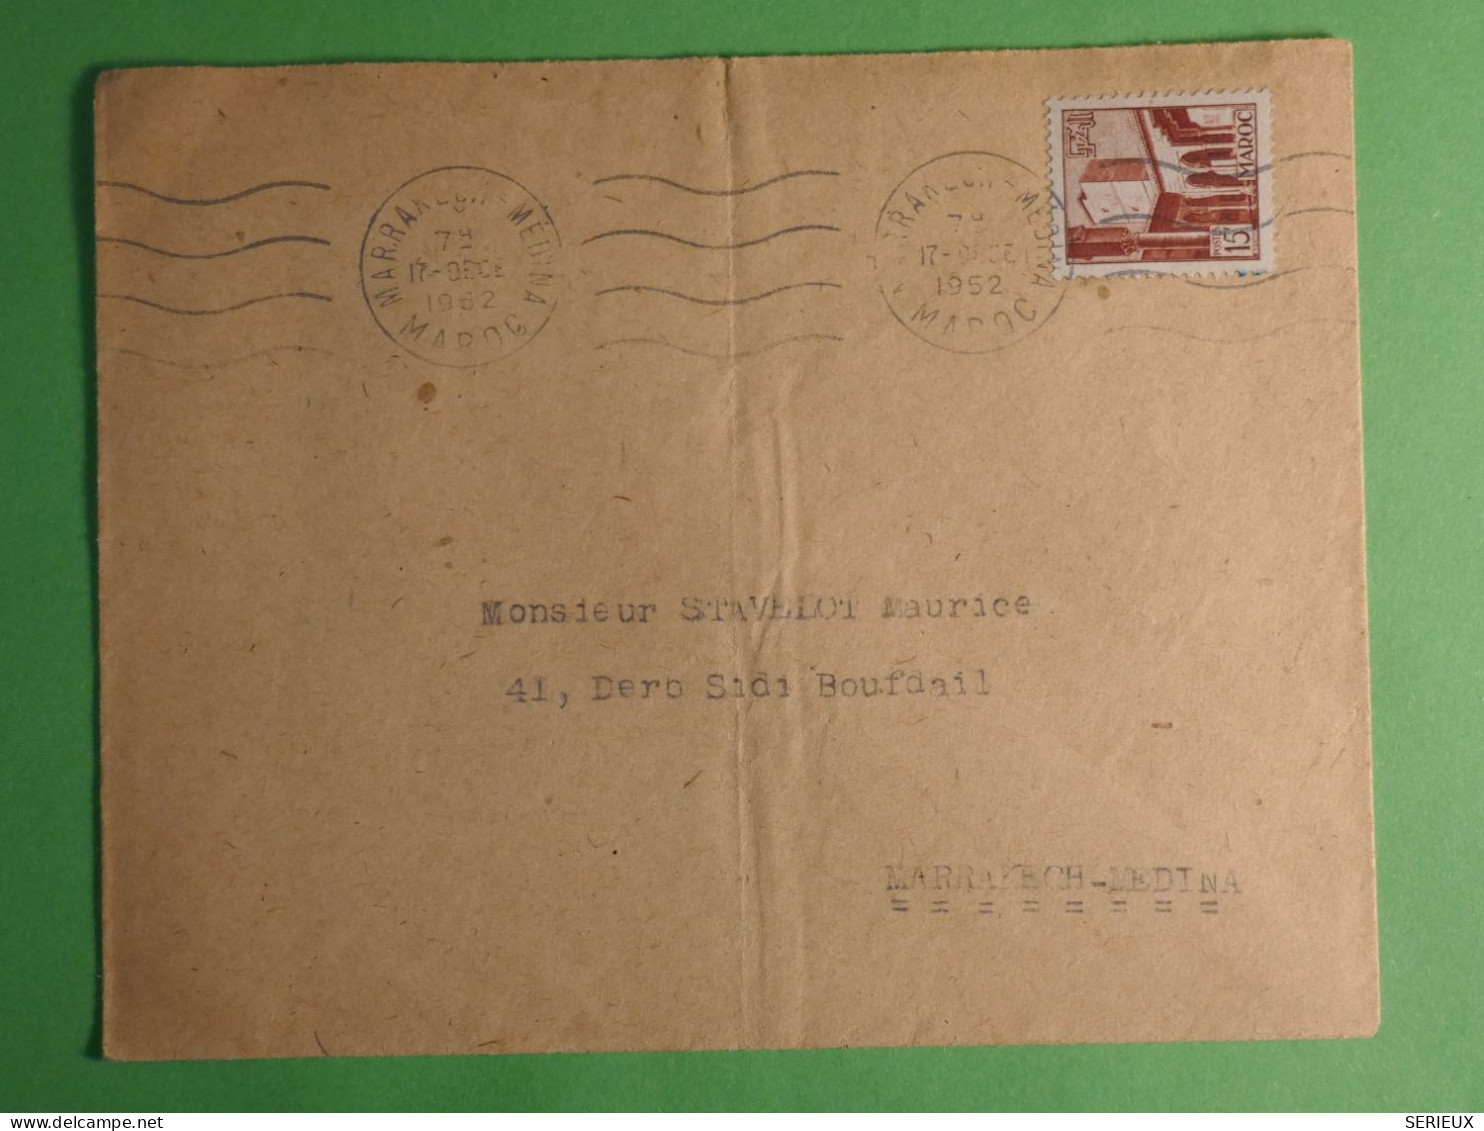 DN17  MAROC   LETTRE   1952  MARRAKESH     + AFF. INTERESSANT +++ - Lettres & Documents